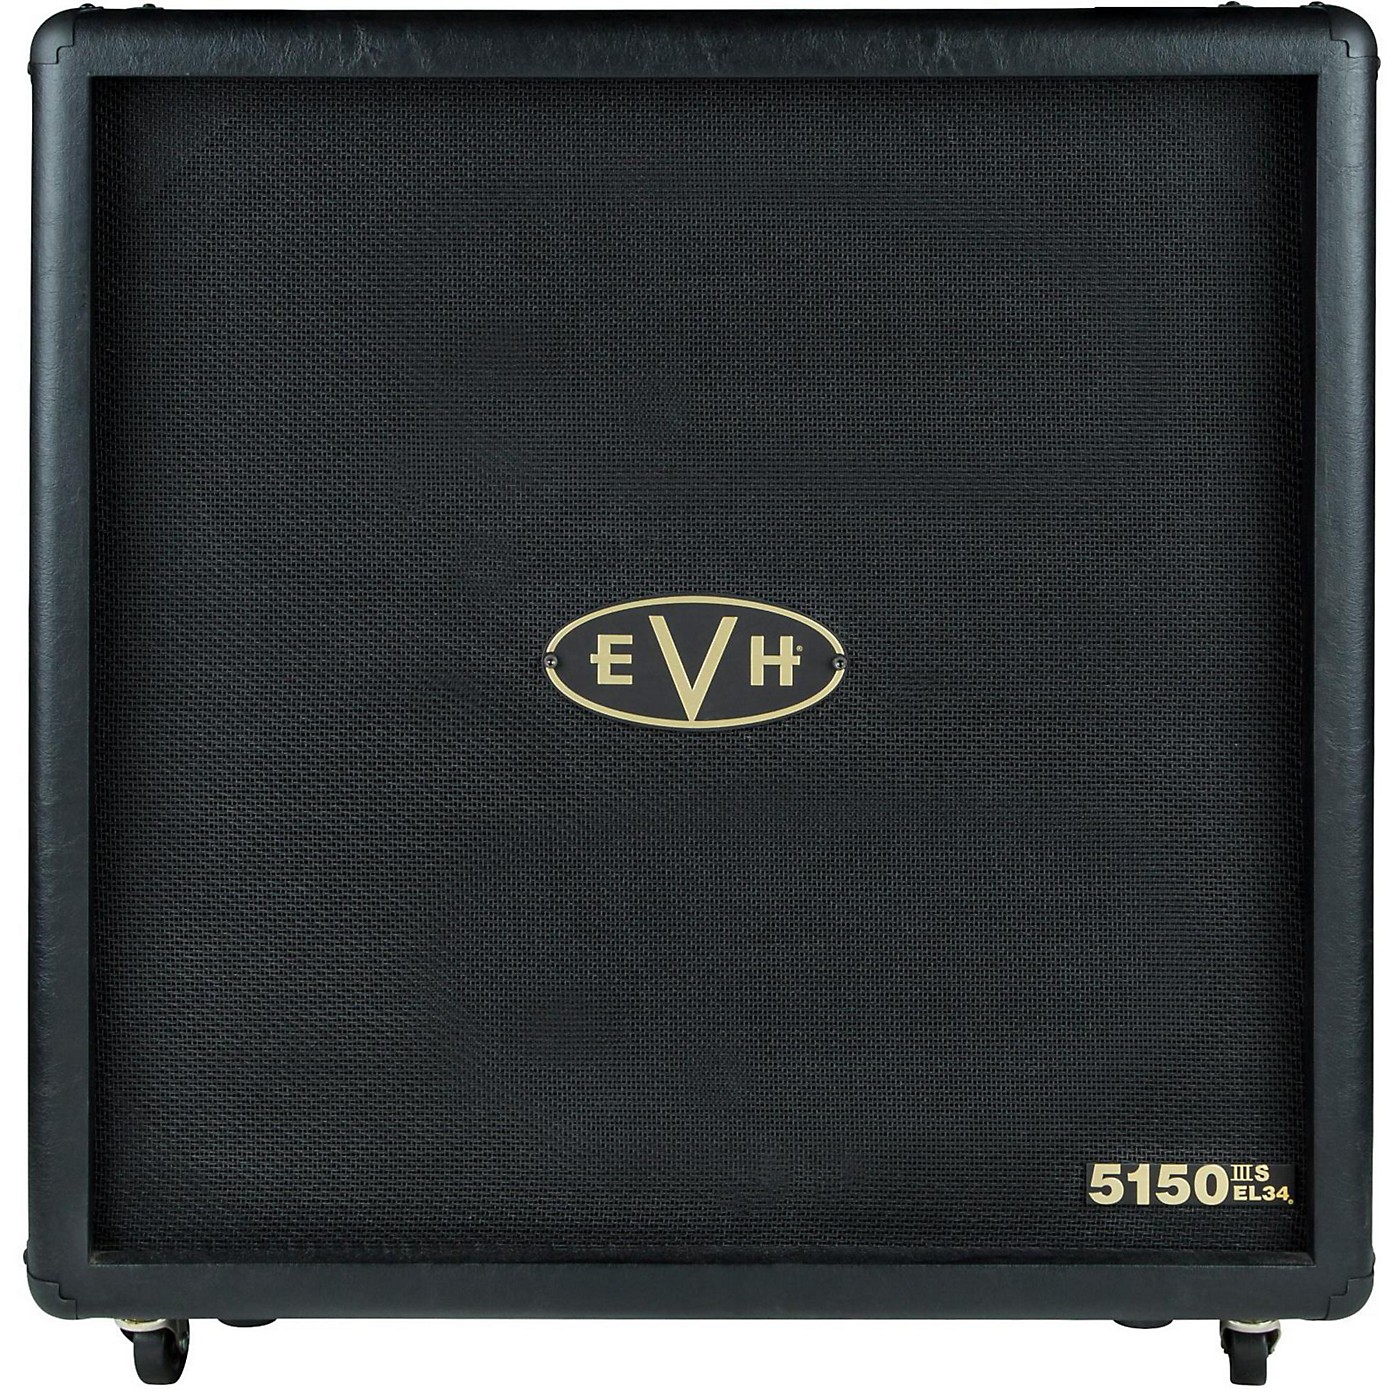 EVH 5150IIIS EL34 412ST 100W 4x12 Guitar Speaker Cabinet thumbnail